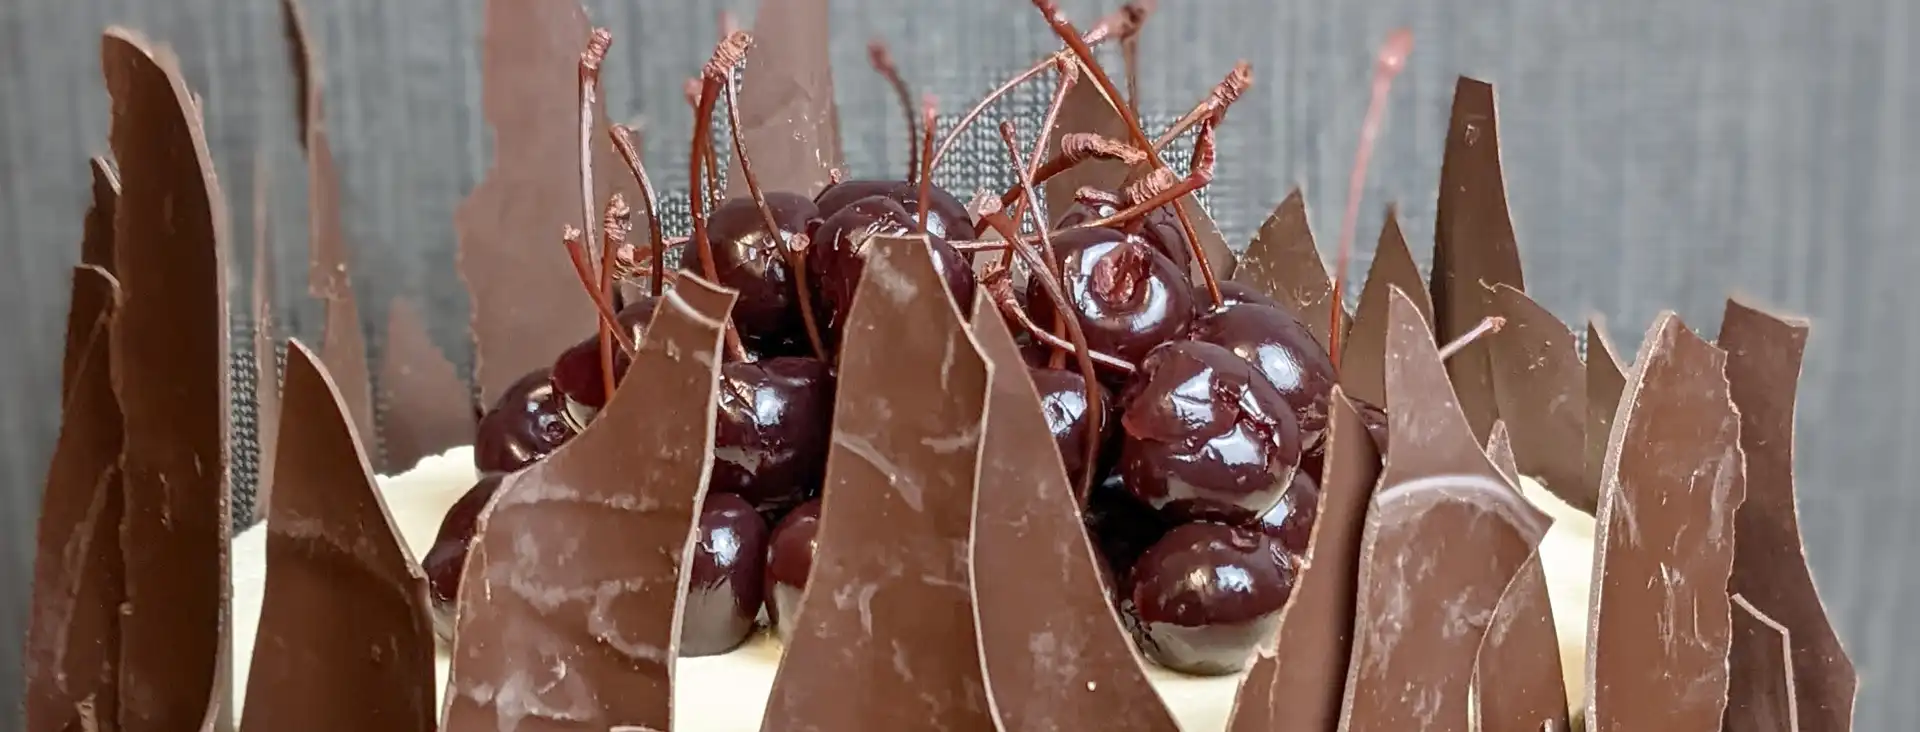 chocolate cherry cake closeup